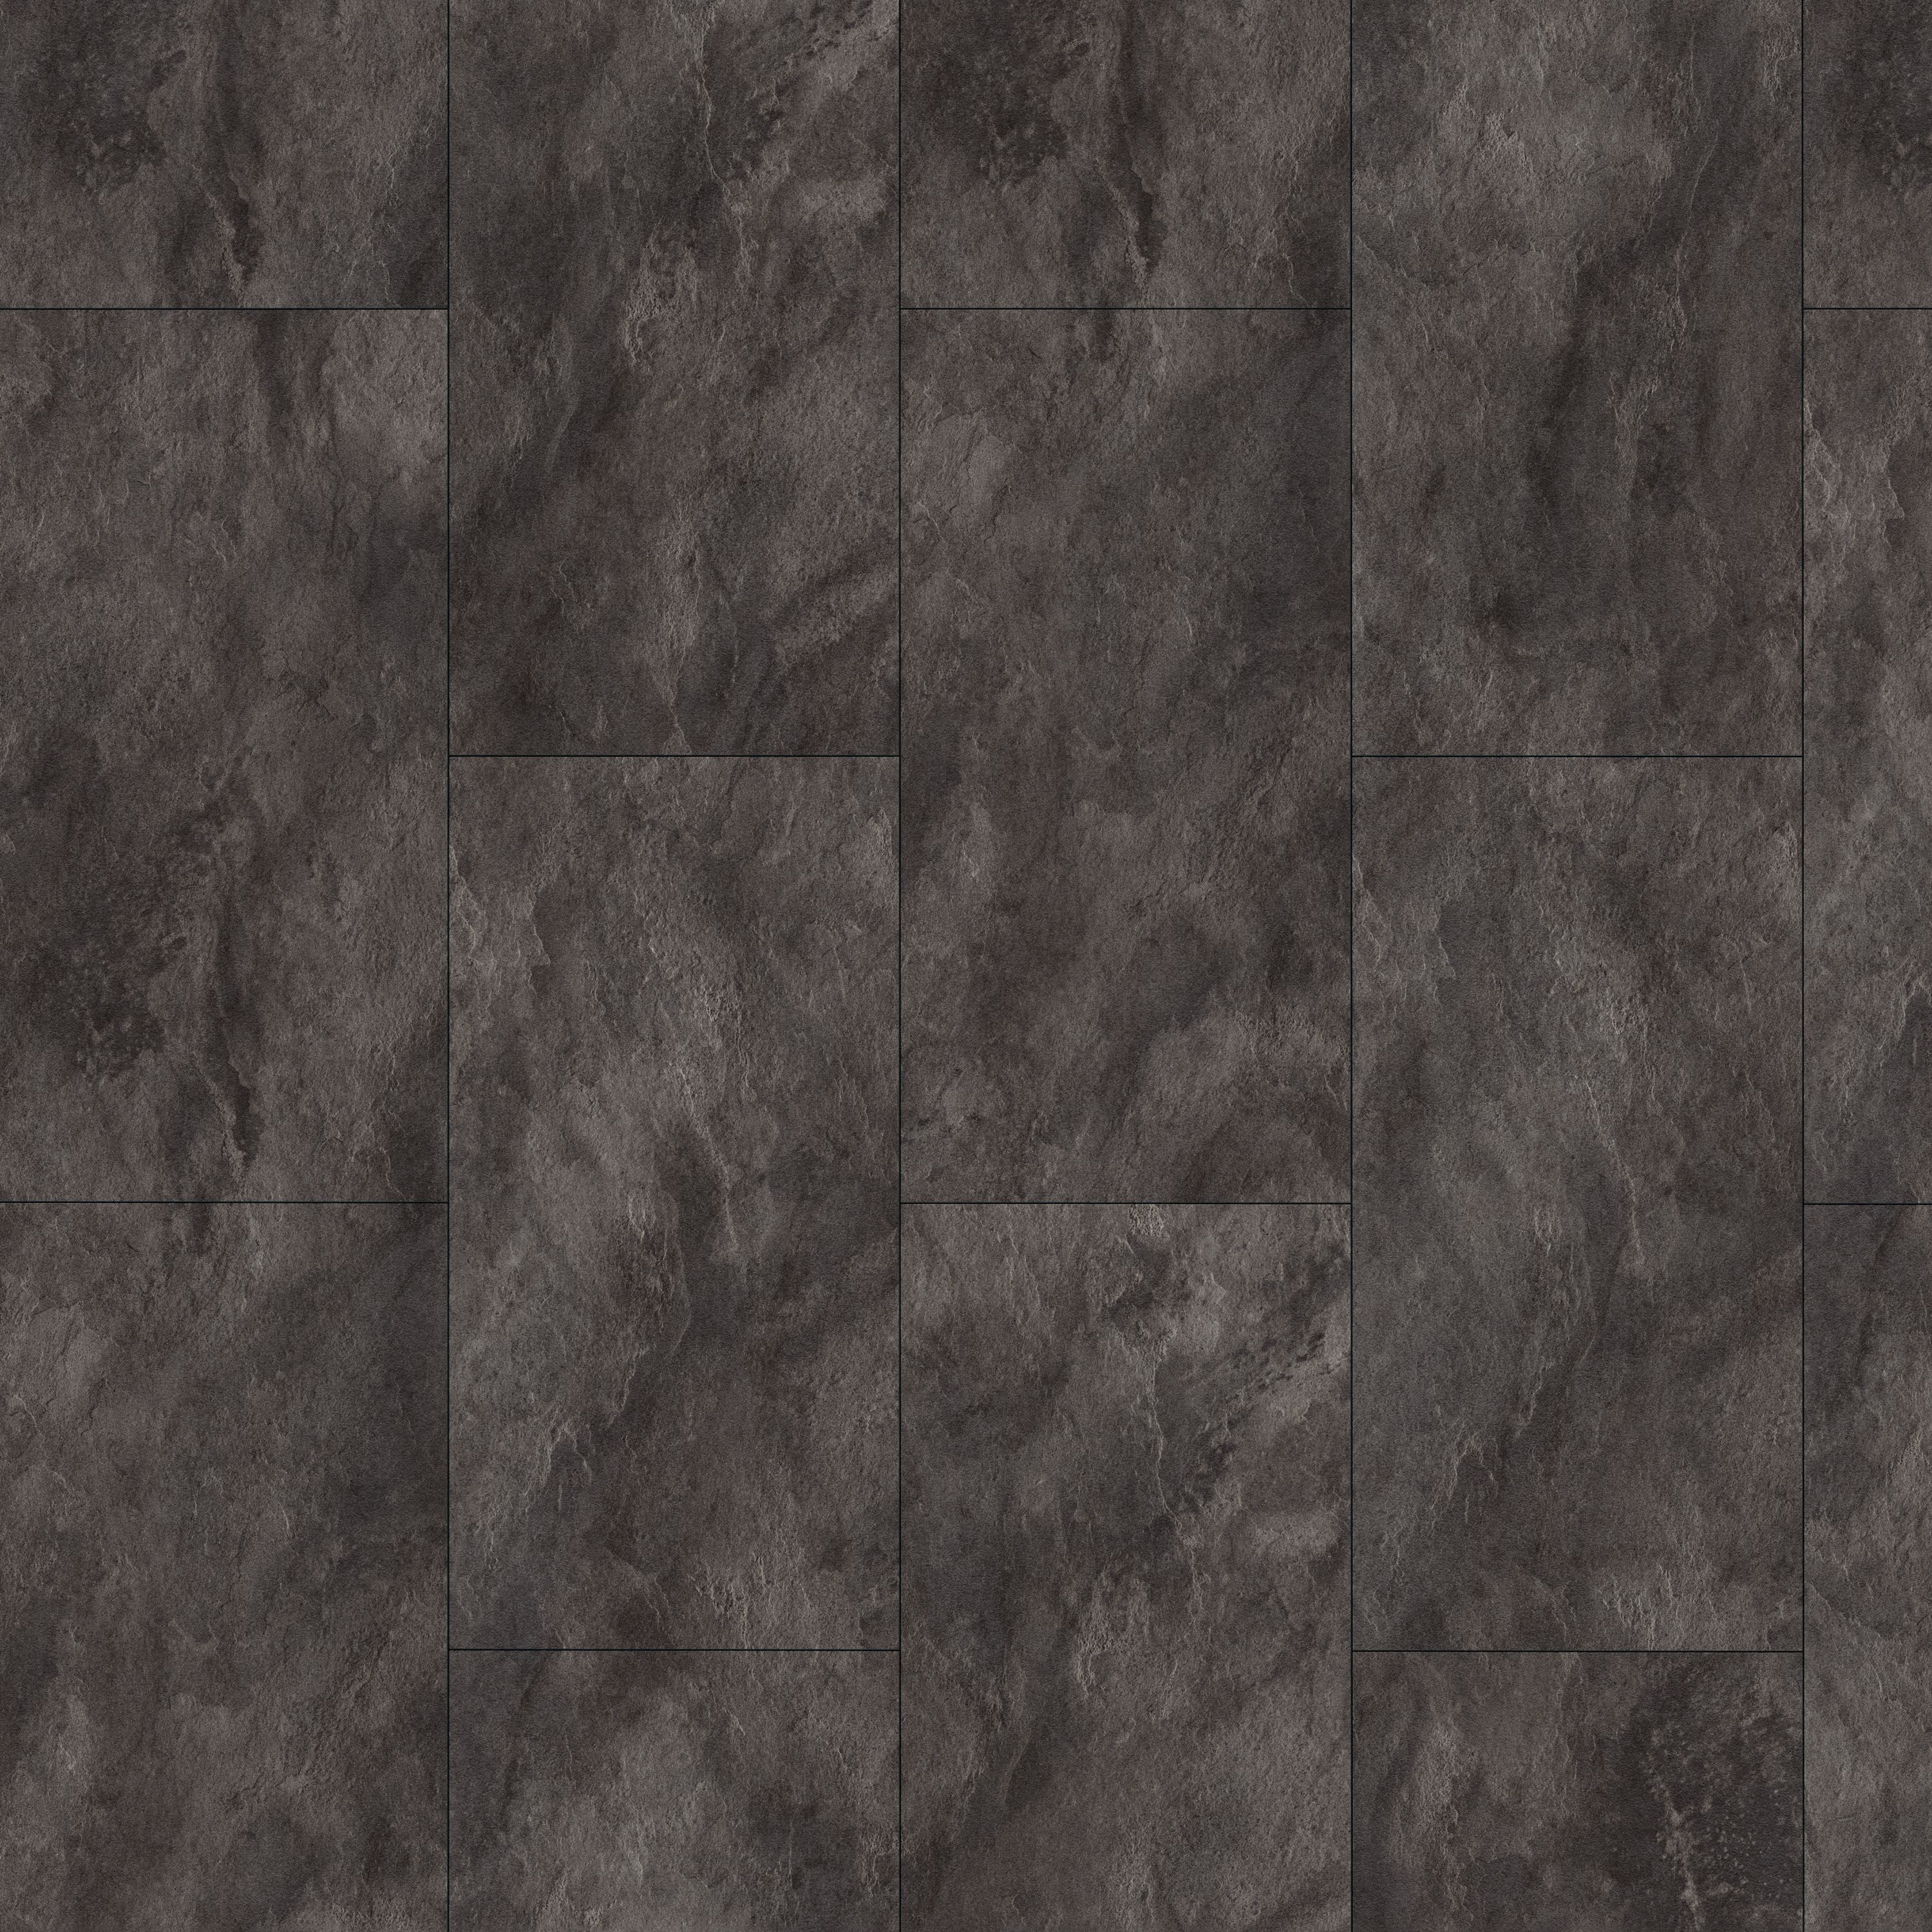 GoodHome Slate Black Stone design Tile effect Laminate Flooring, 2.53m²